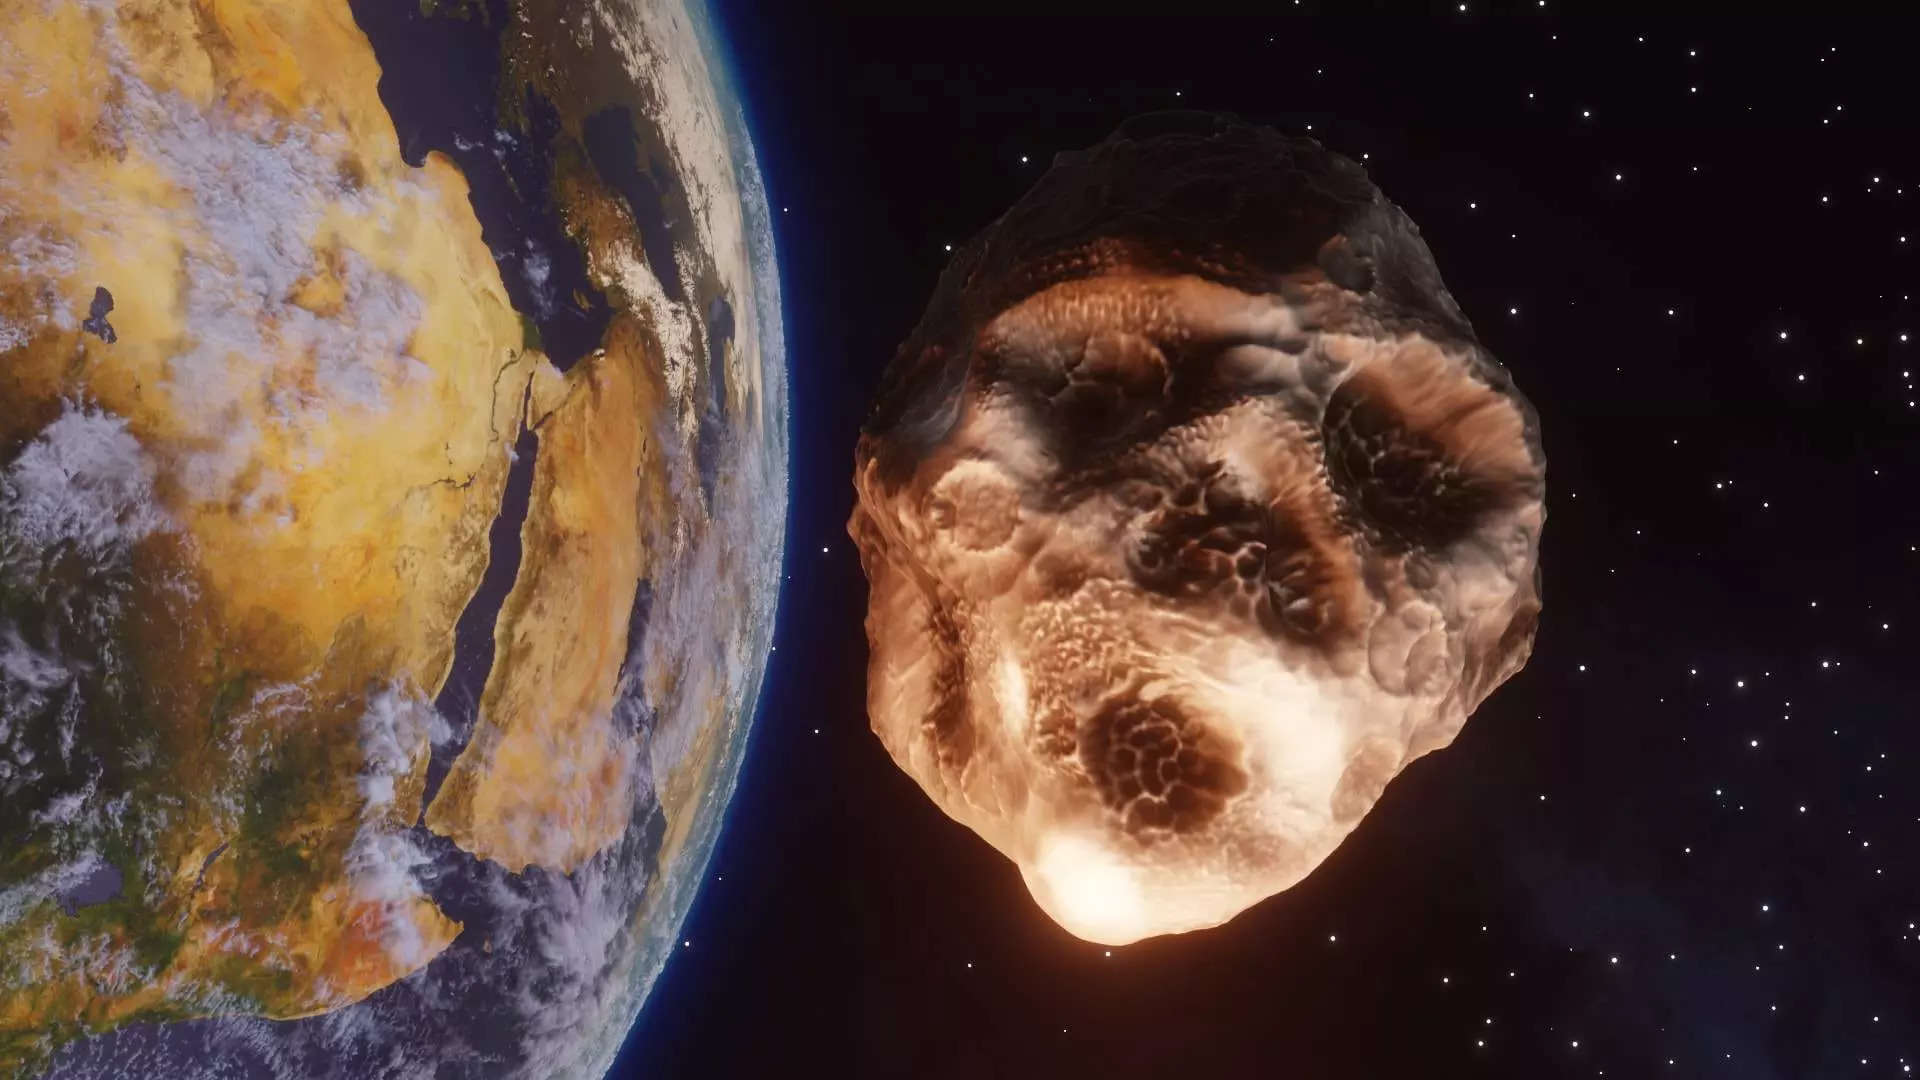 Chelyabinsk meteor: Will asteroids hit Earth?